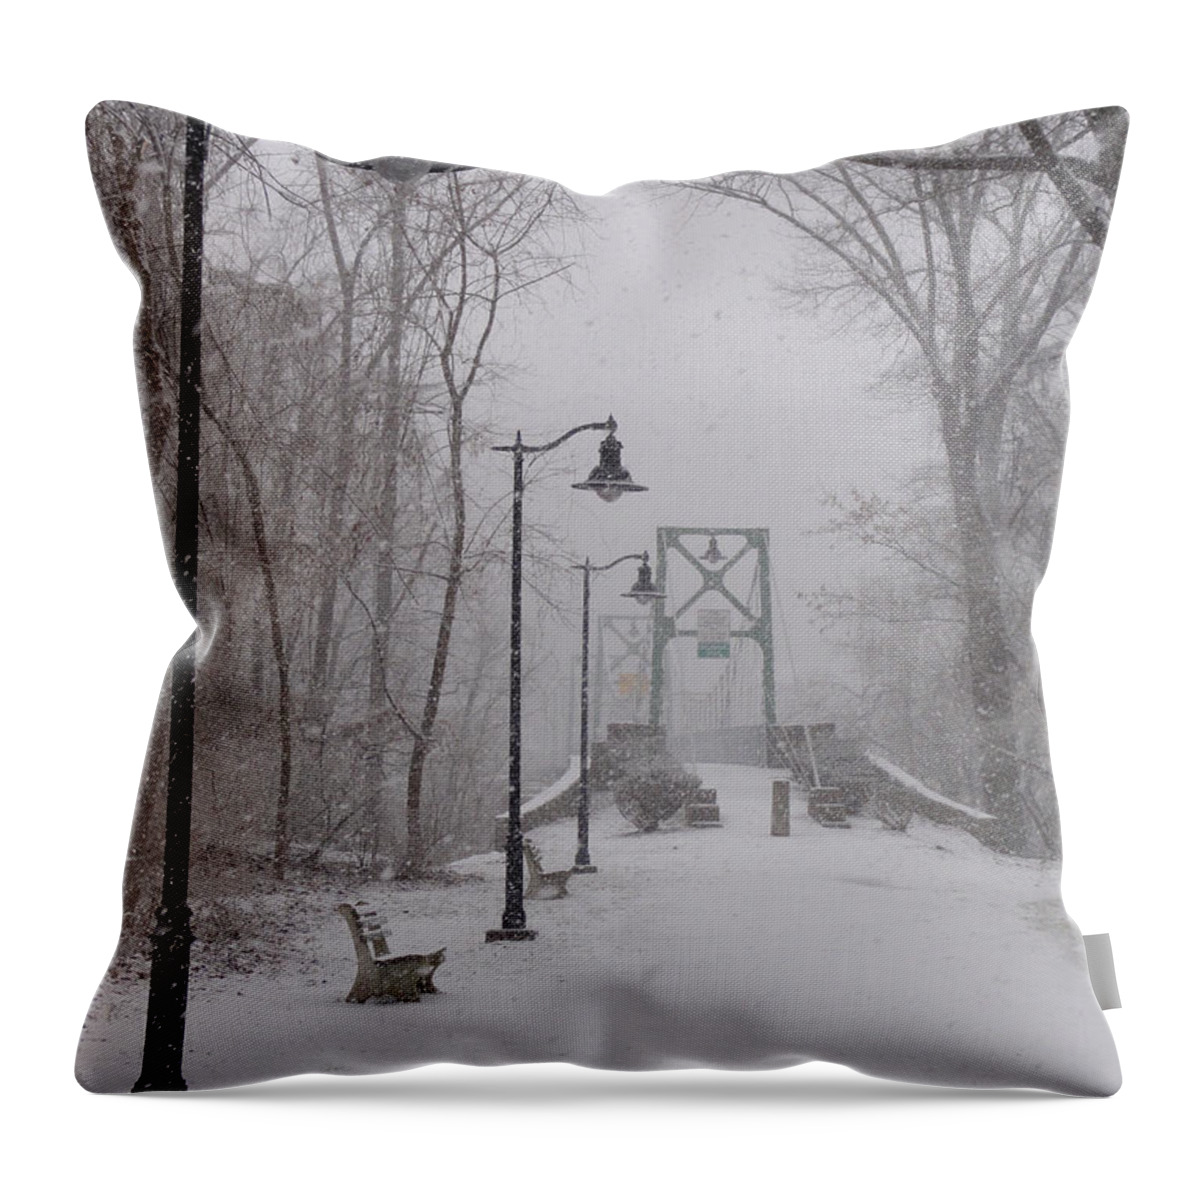 Bridge Throw Pillow featuring the photograph Snow at Bulls Island - 05 by Christopher Plummer